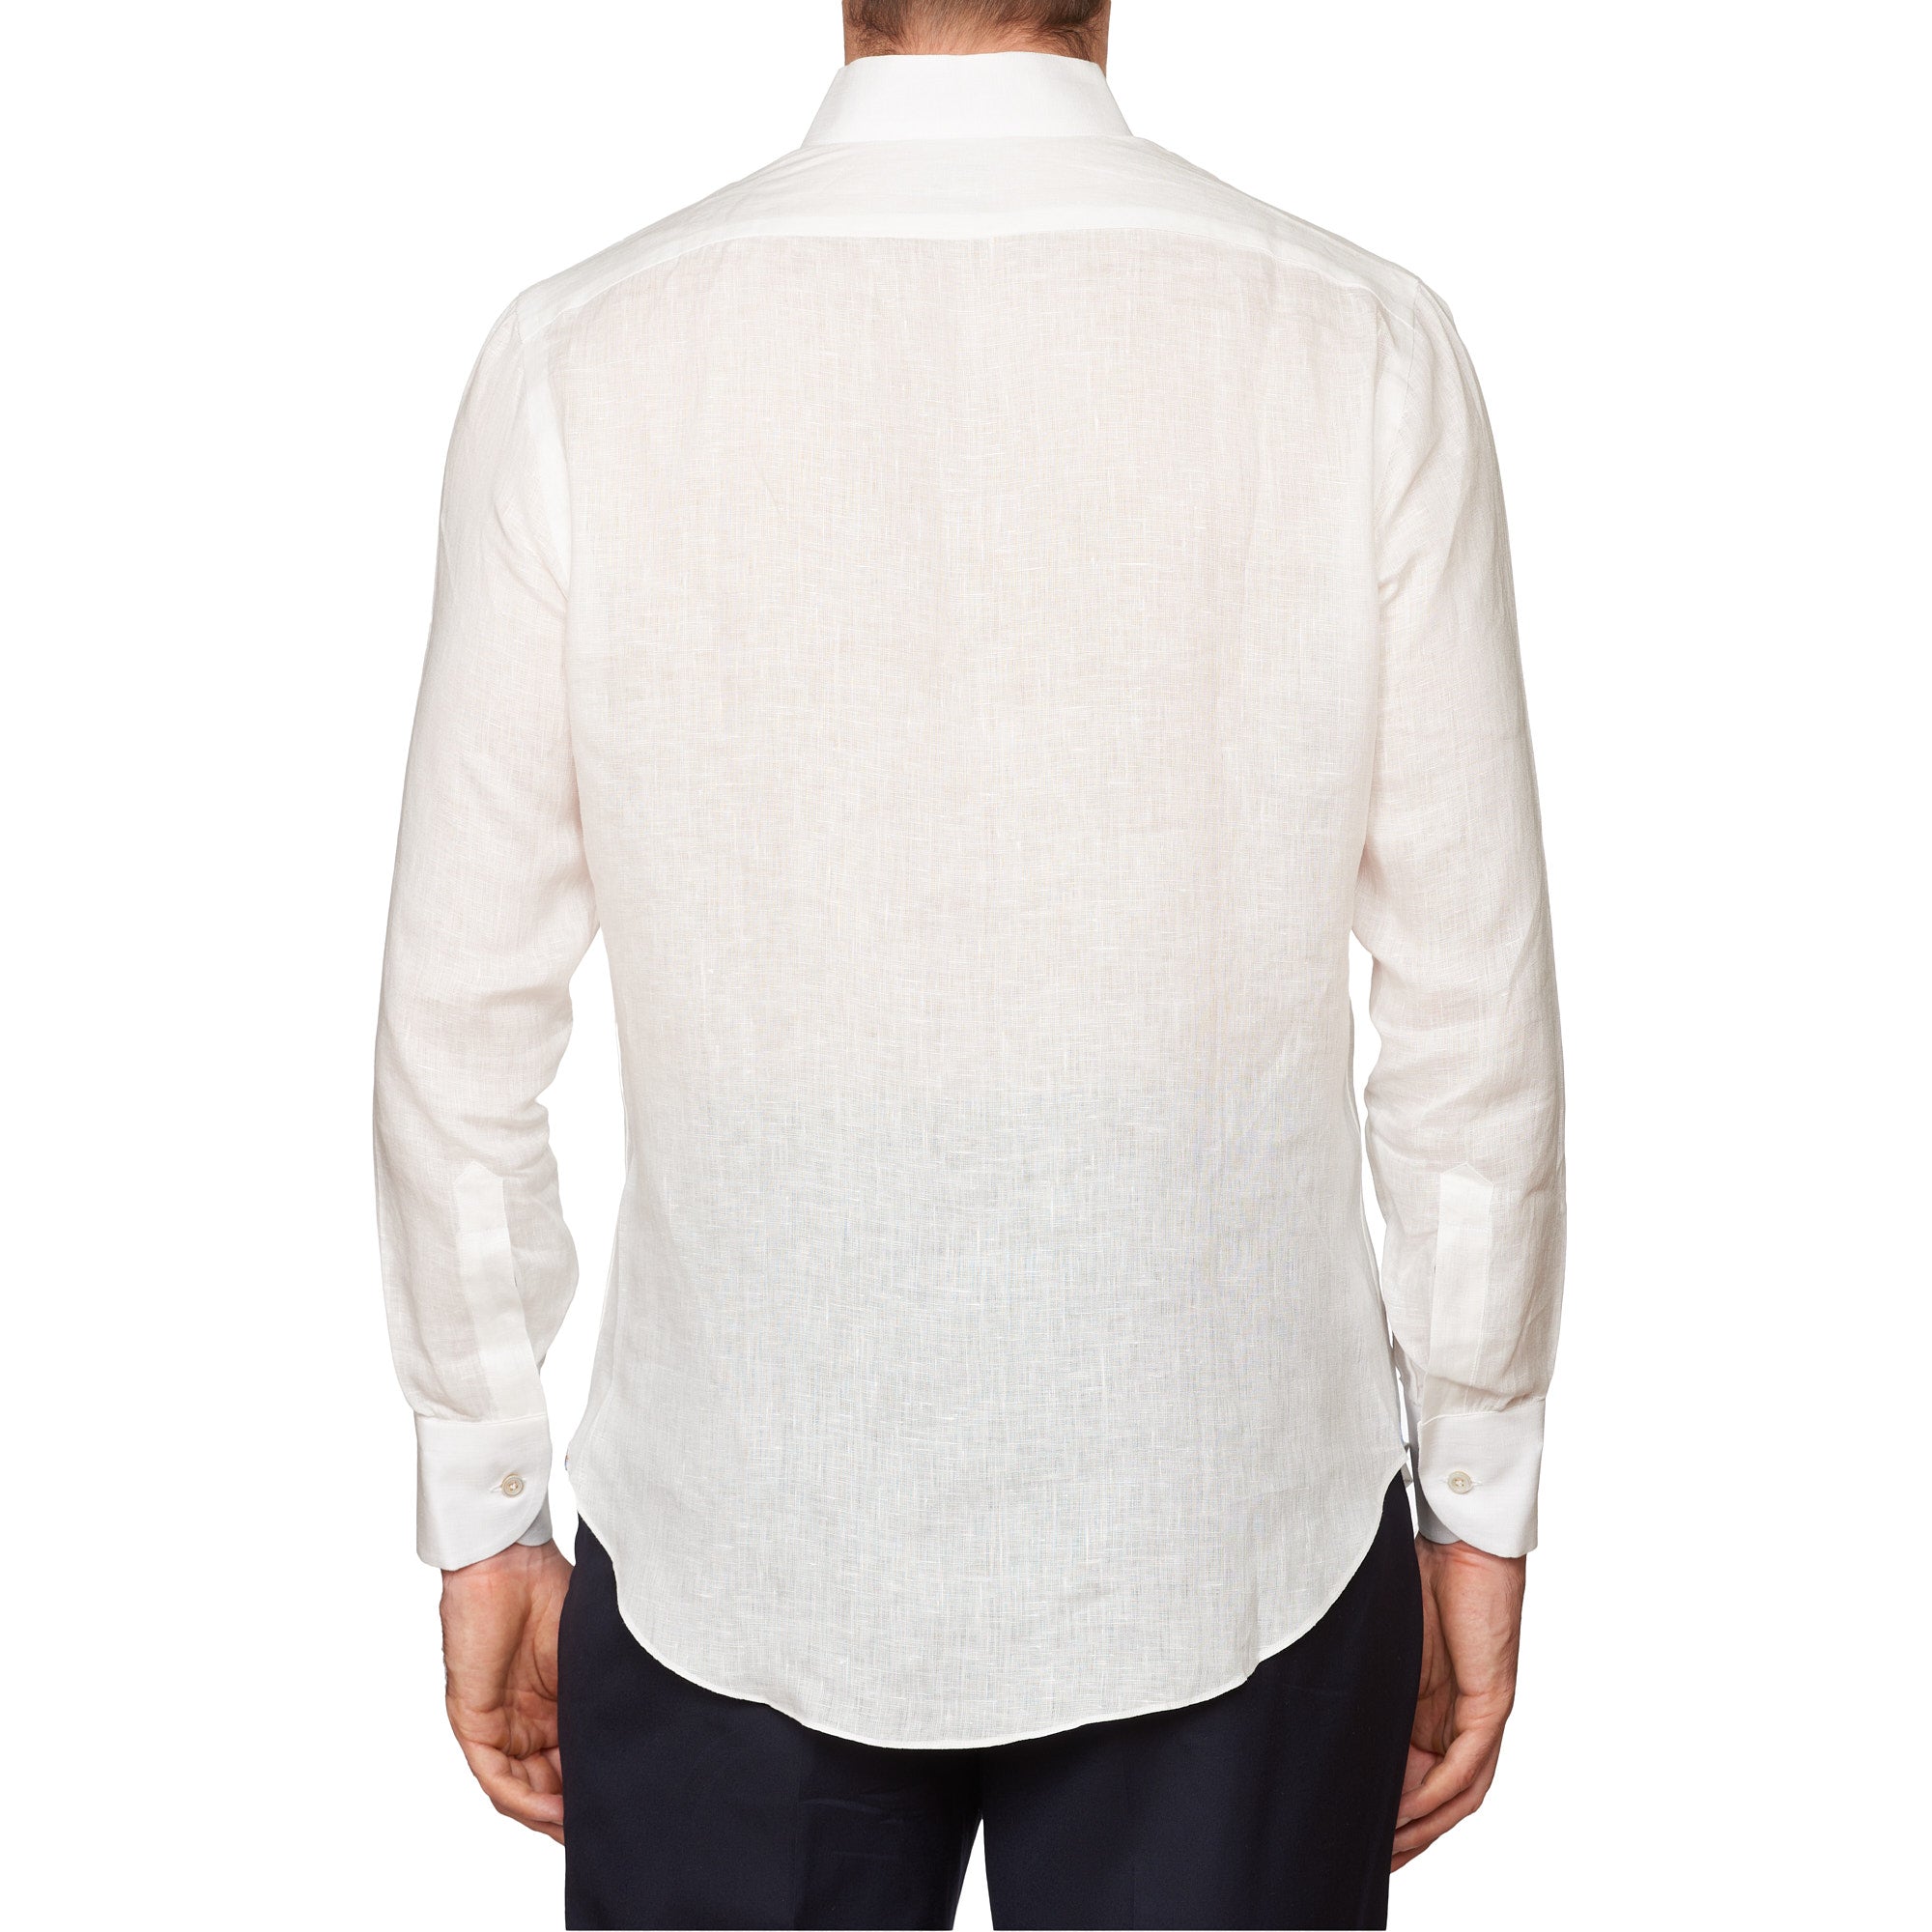 Sartoria CHIAIA Bespoke Handmade White Linen Band Collar Shirt EU 39 NEW US 15.5 SARTORIA CHIAIA